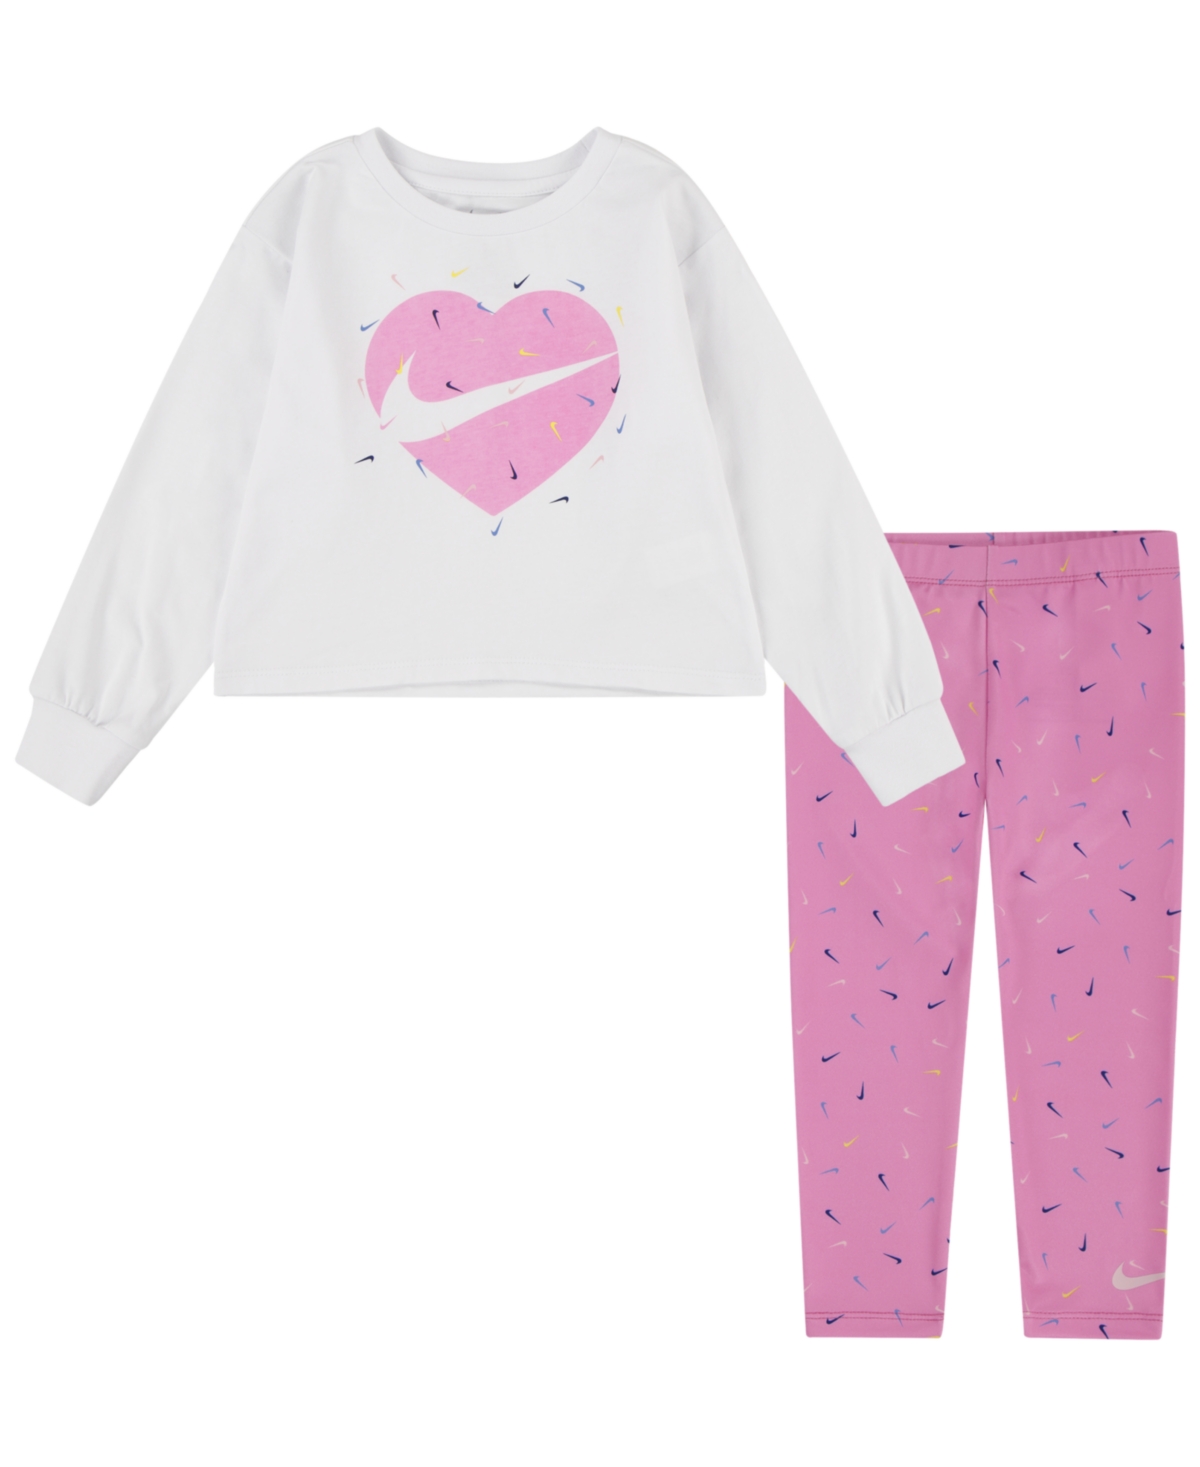 Nike Toddler Girls Long Sleeve T-shirt And Leggings, 2 Piece Set In Playful Pink